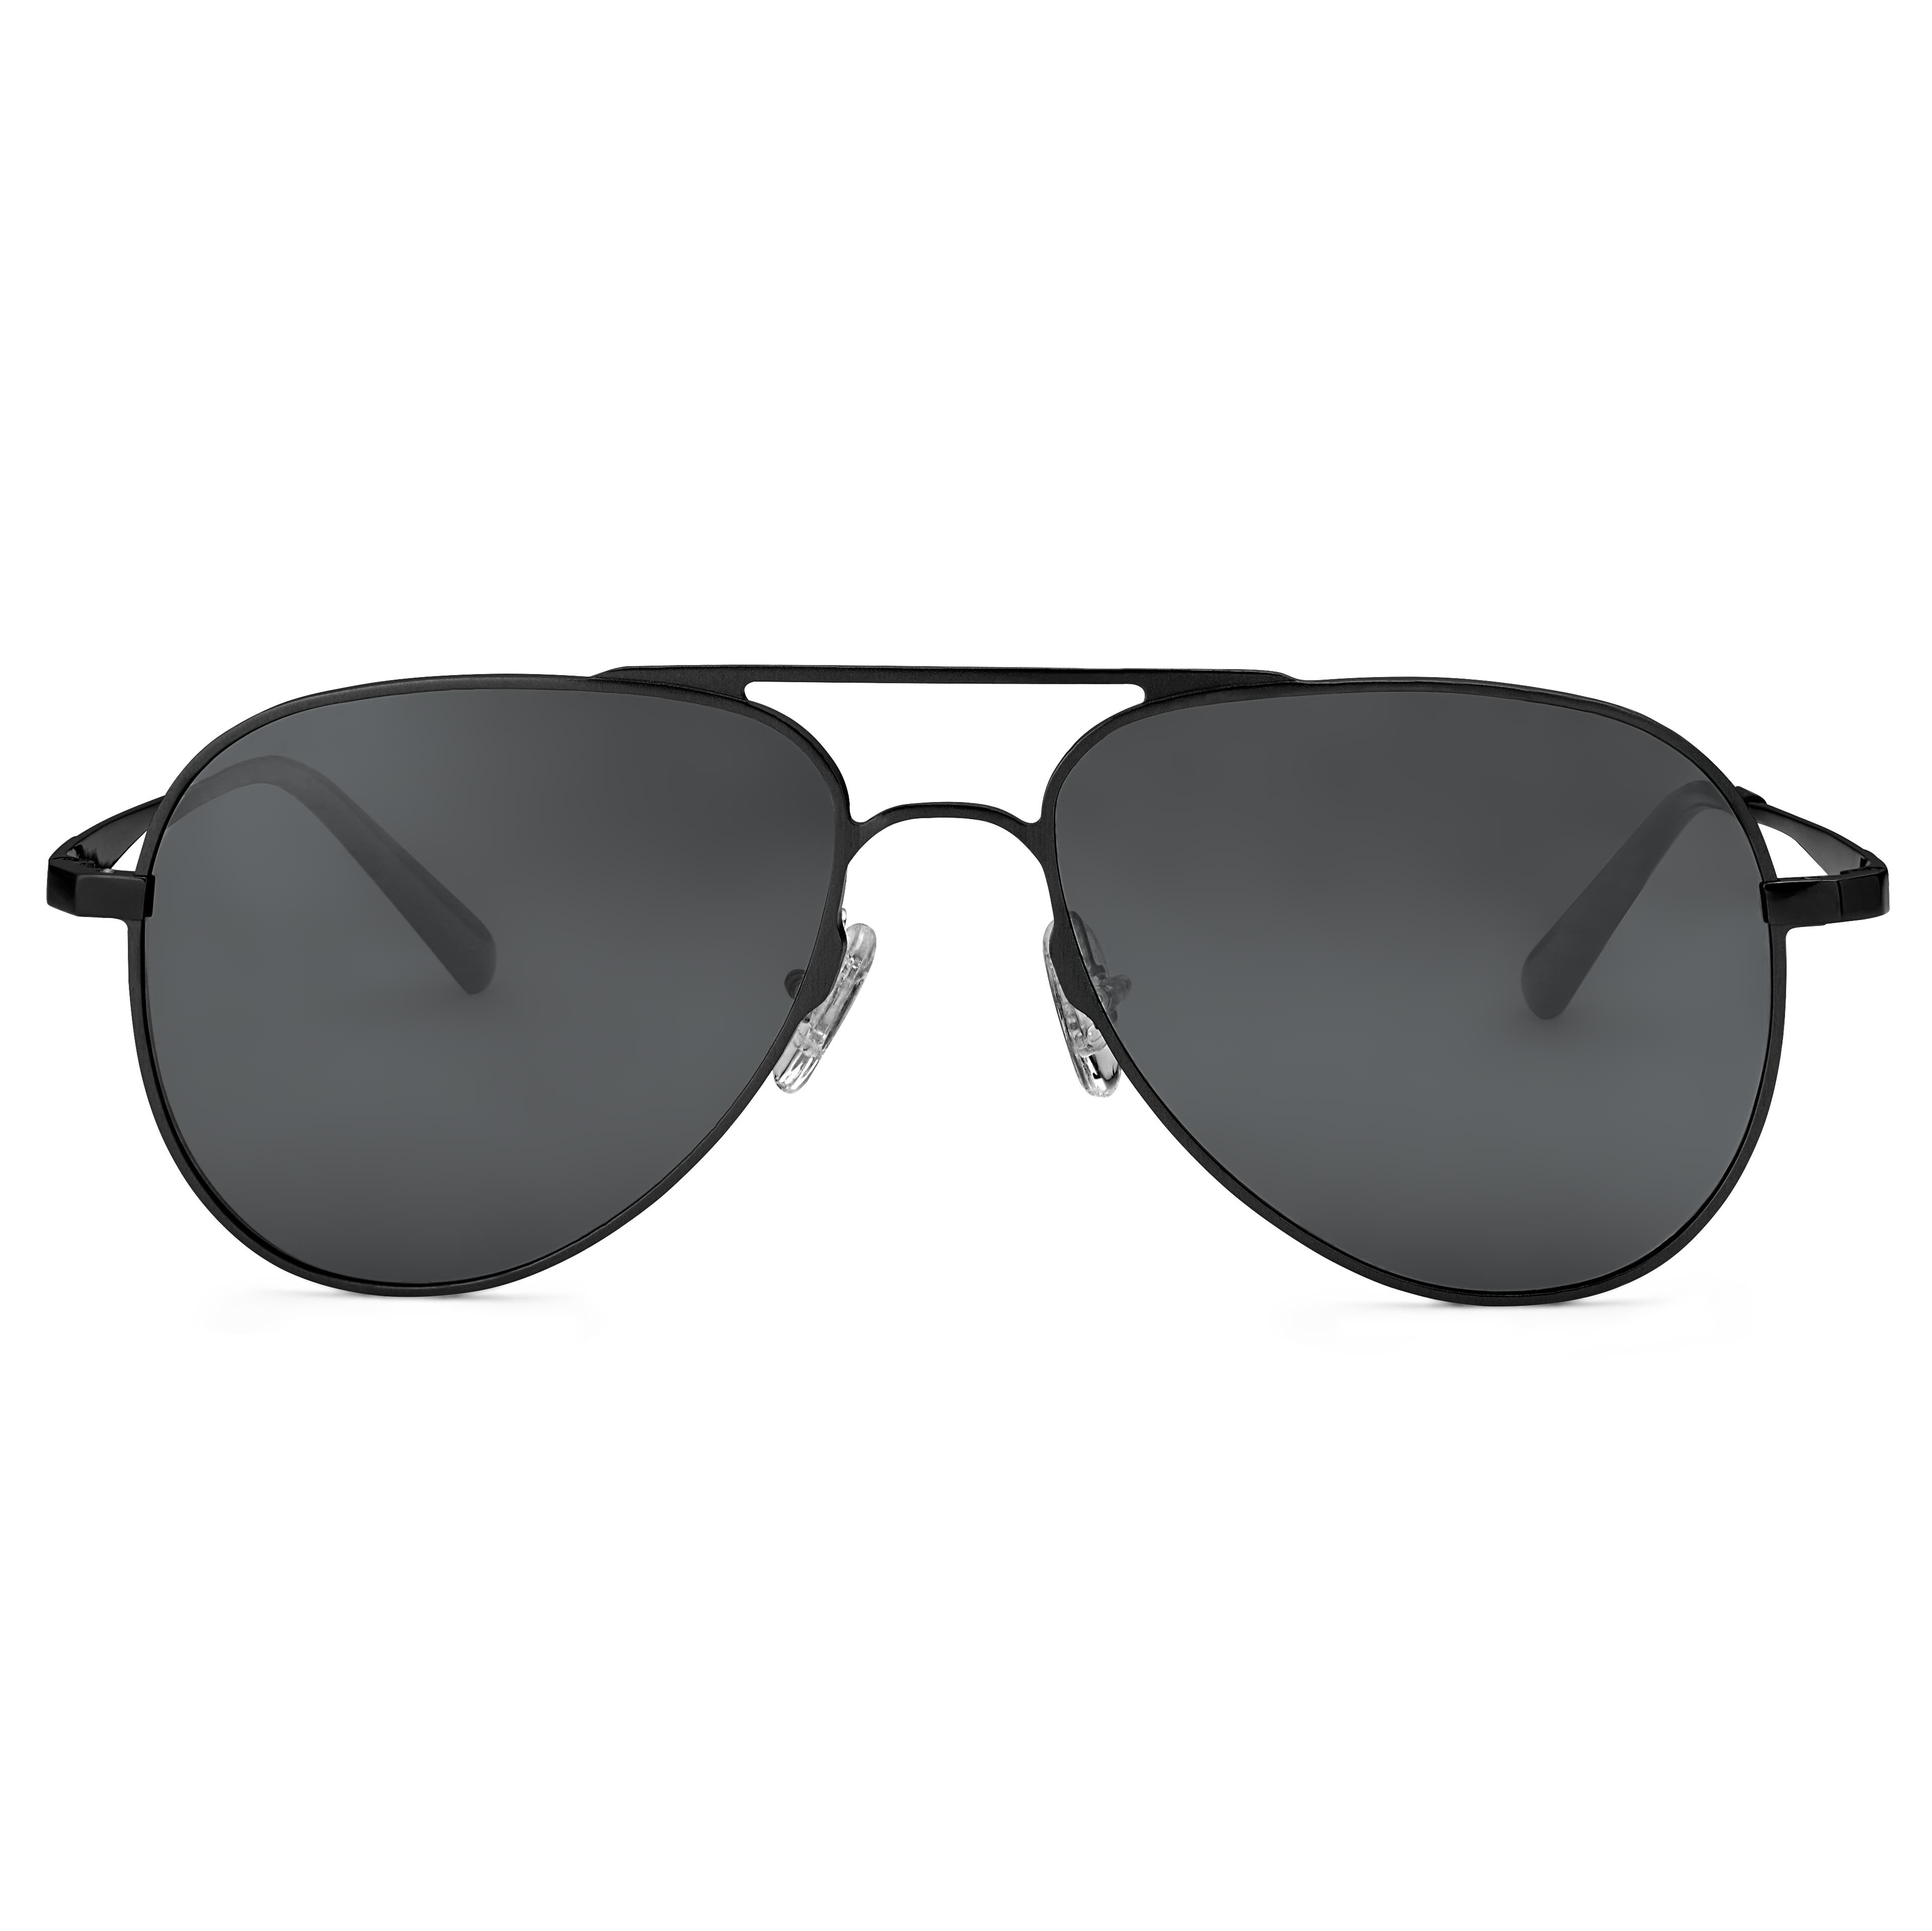  OPTOFENDY Aviator Sunglasses for Men, Polarized Sunglasses Men  Square Mens Sunglasses Retro Military Style Aviator Sunglasses (Black) :  Clothing, Shoes & Jewelry